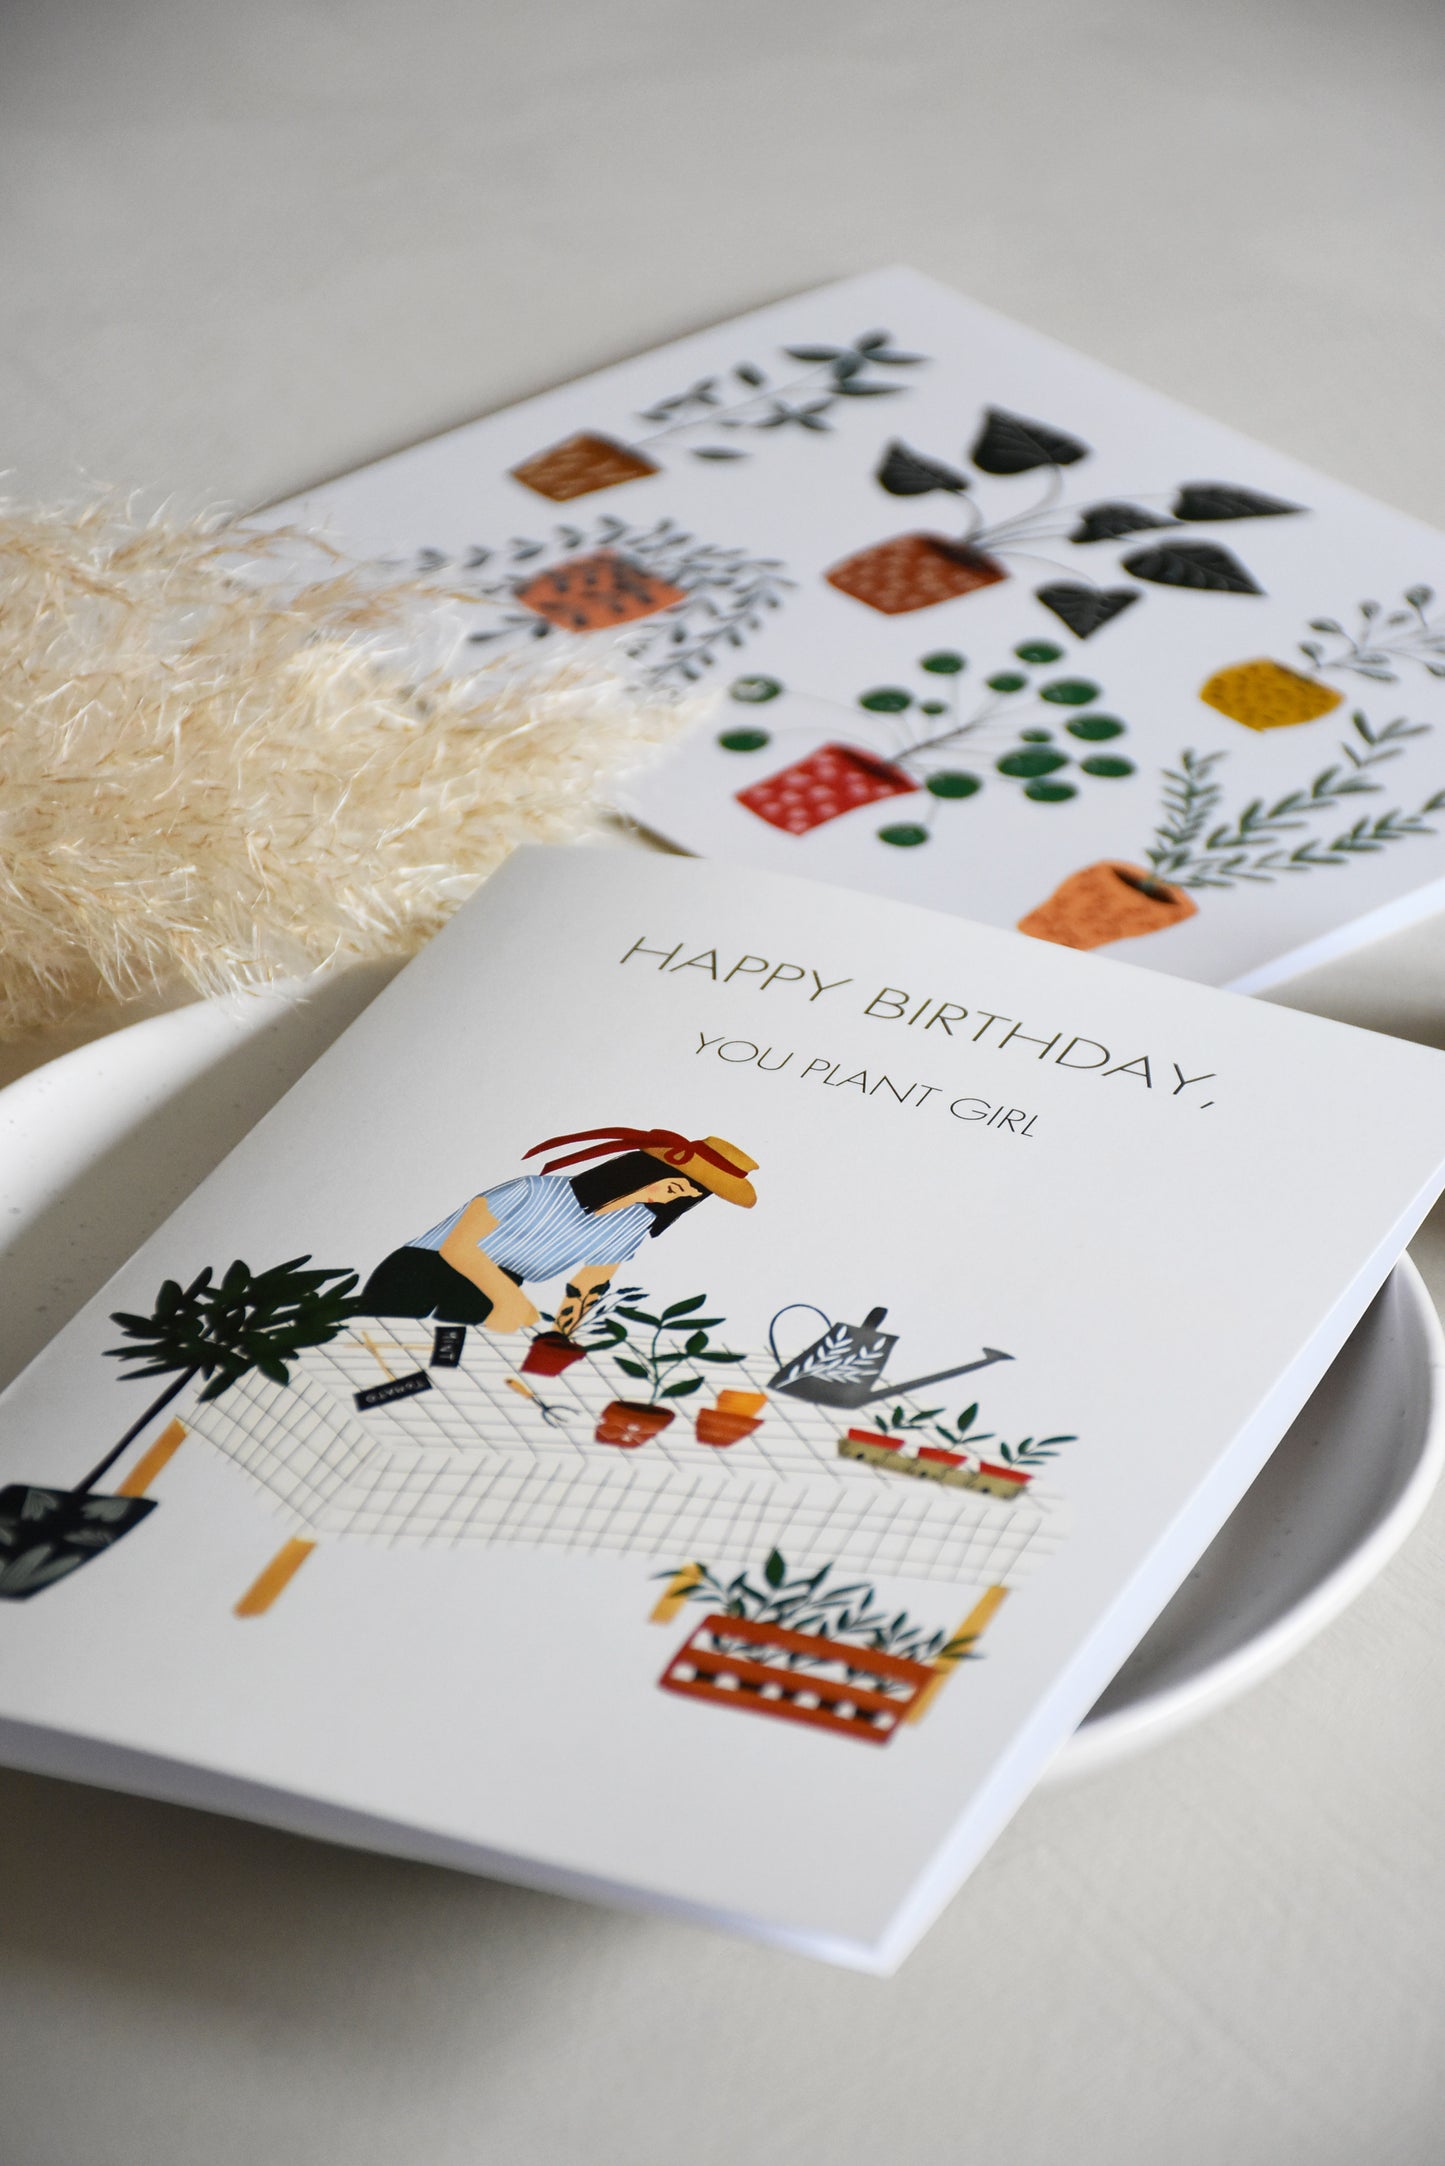 Greeting card -  Happy Birthday, you plant girl